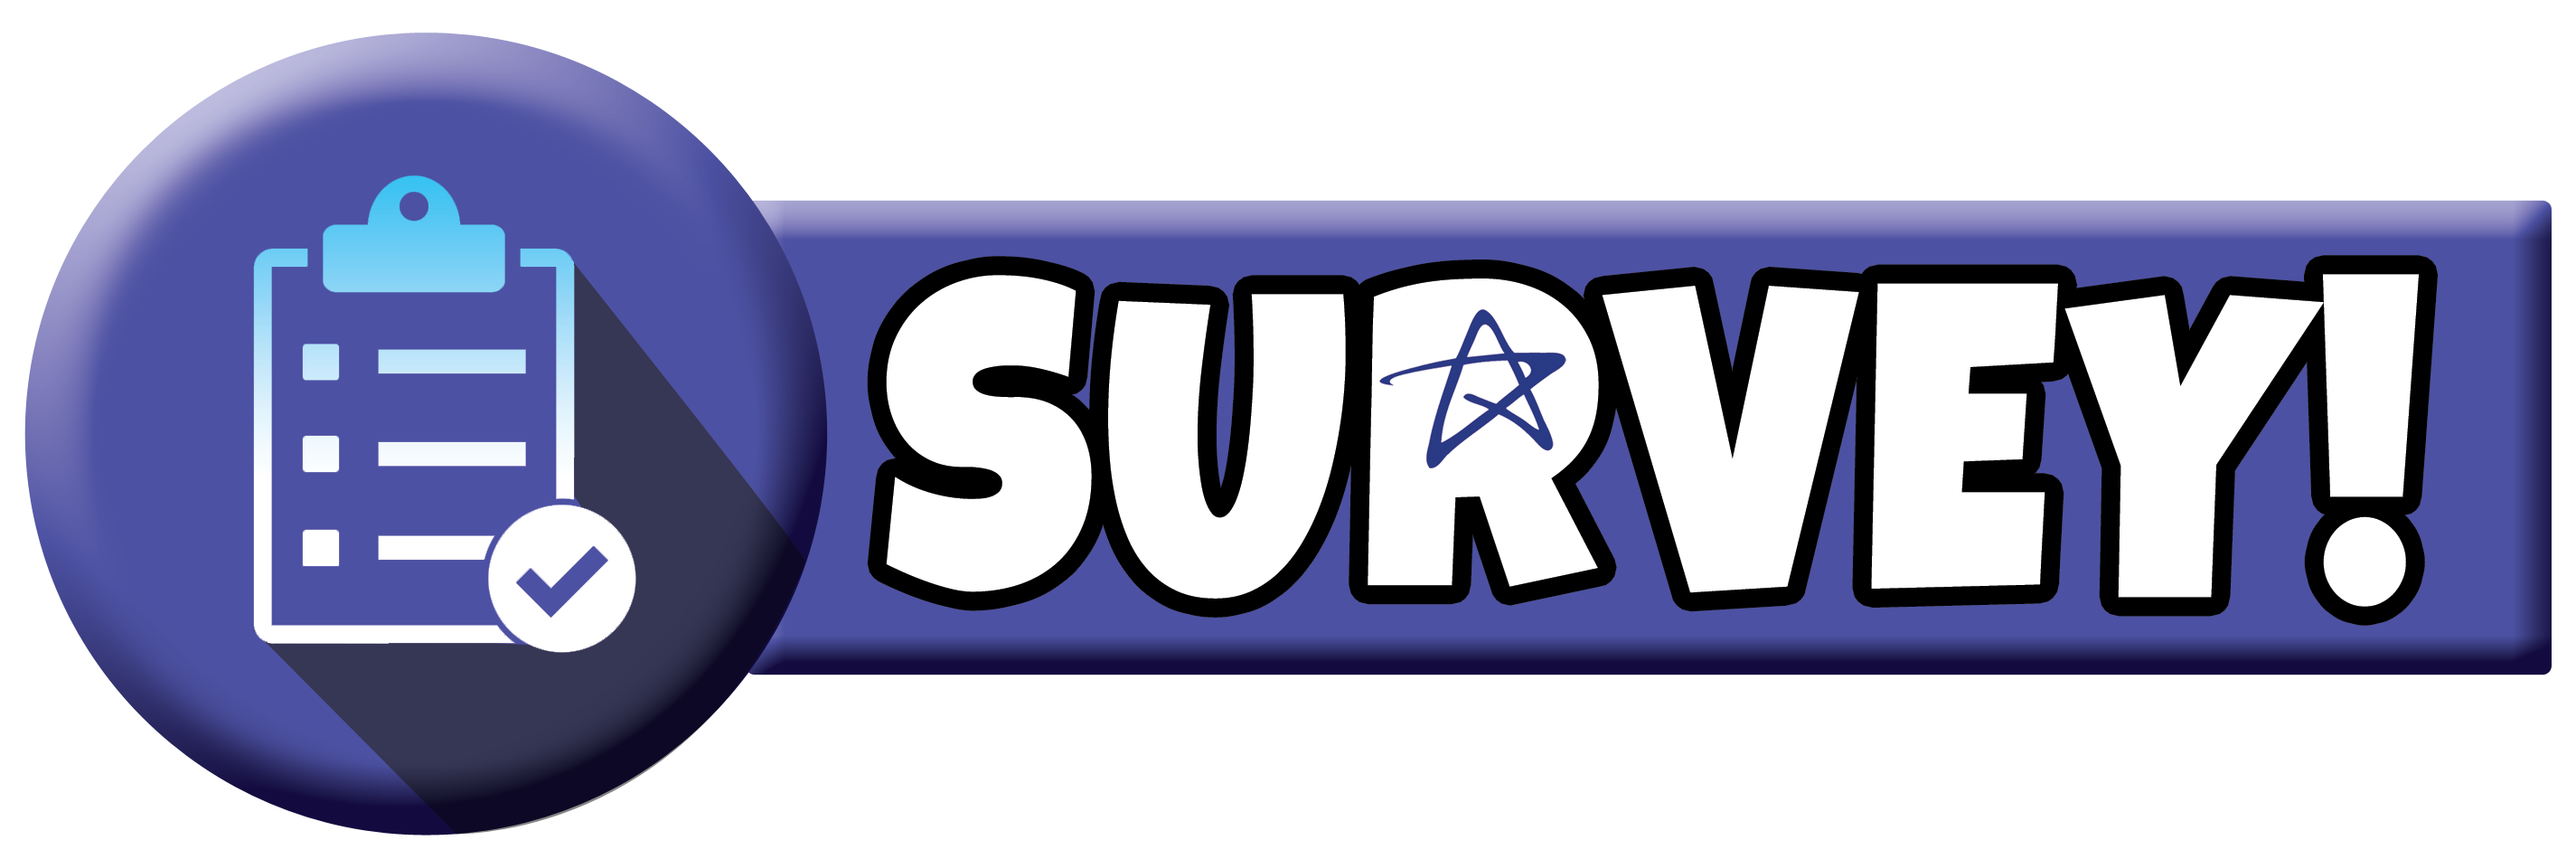 Star_Survey